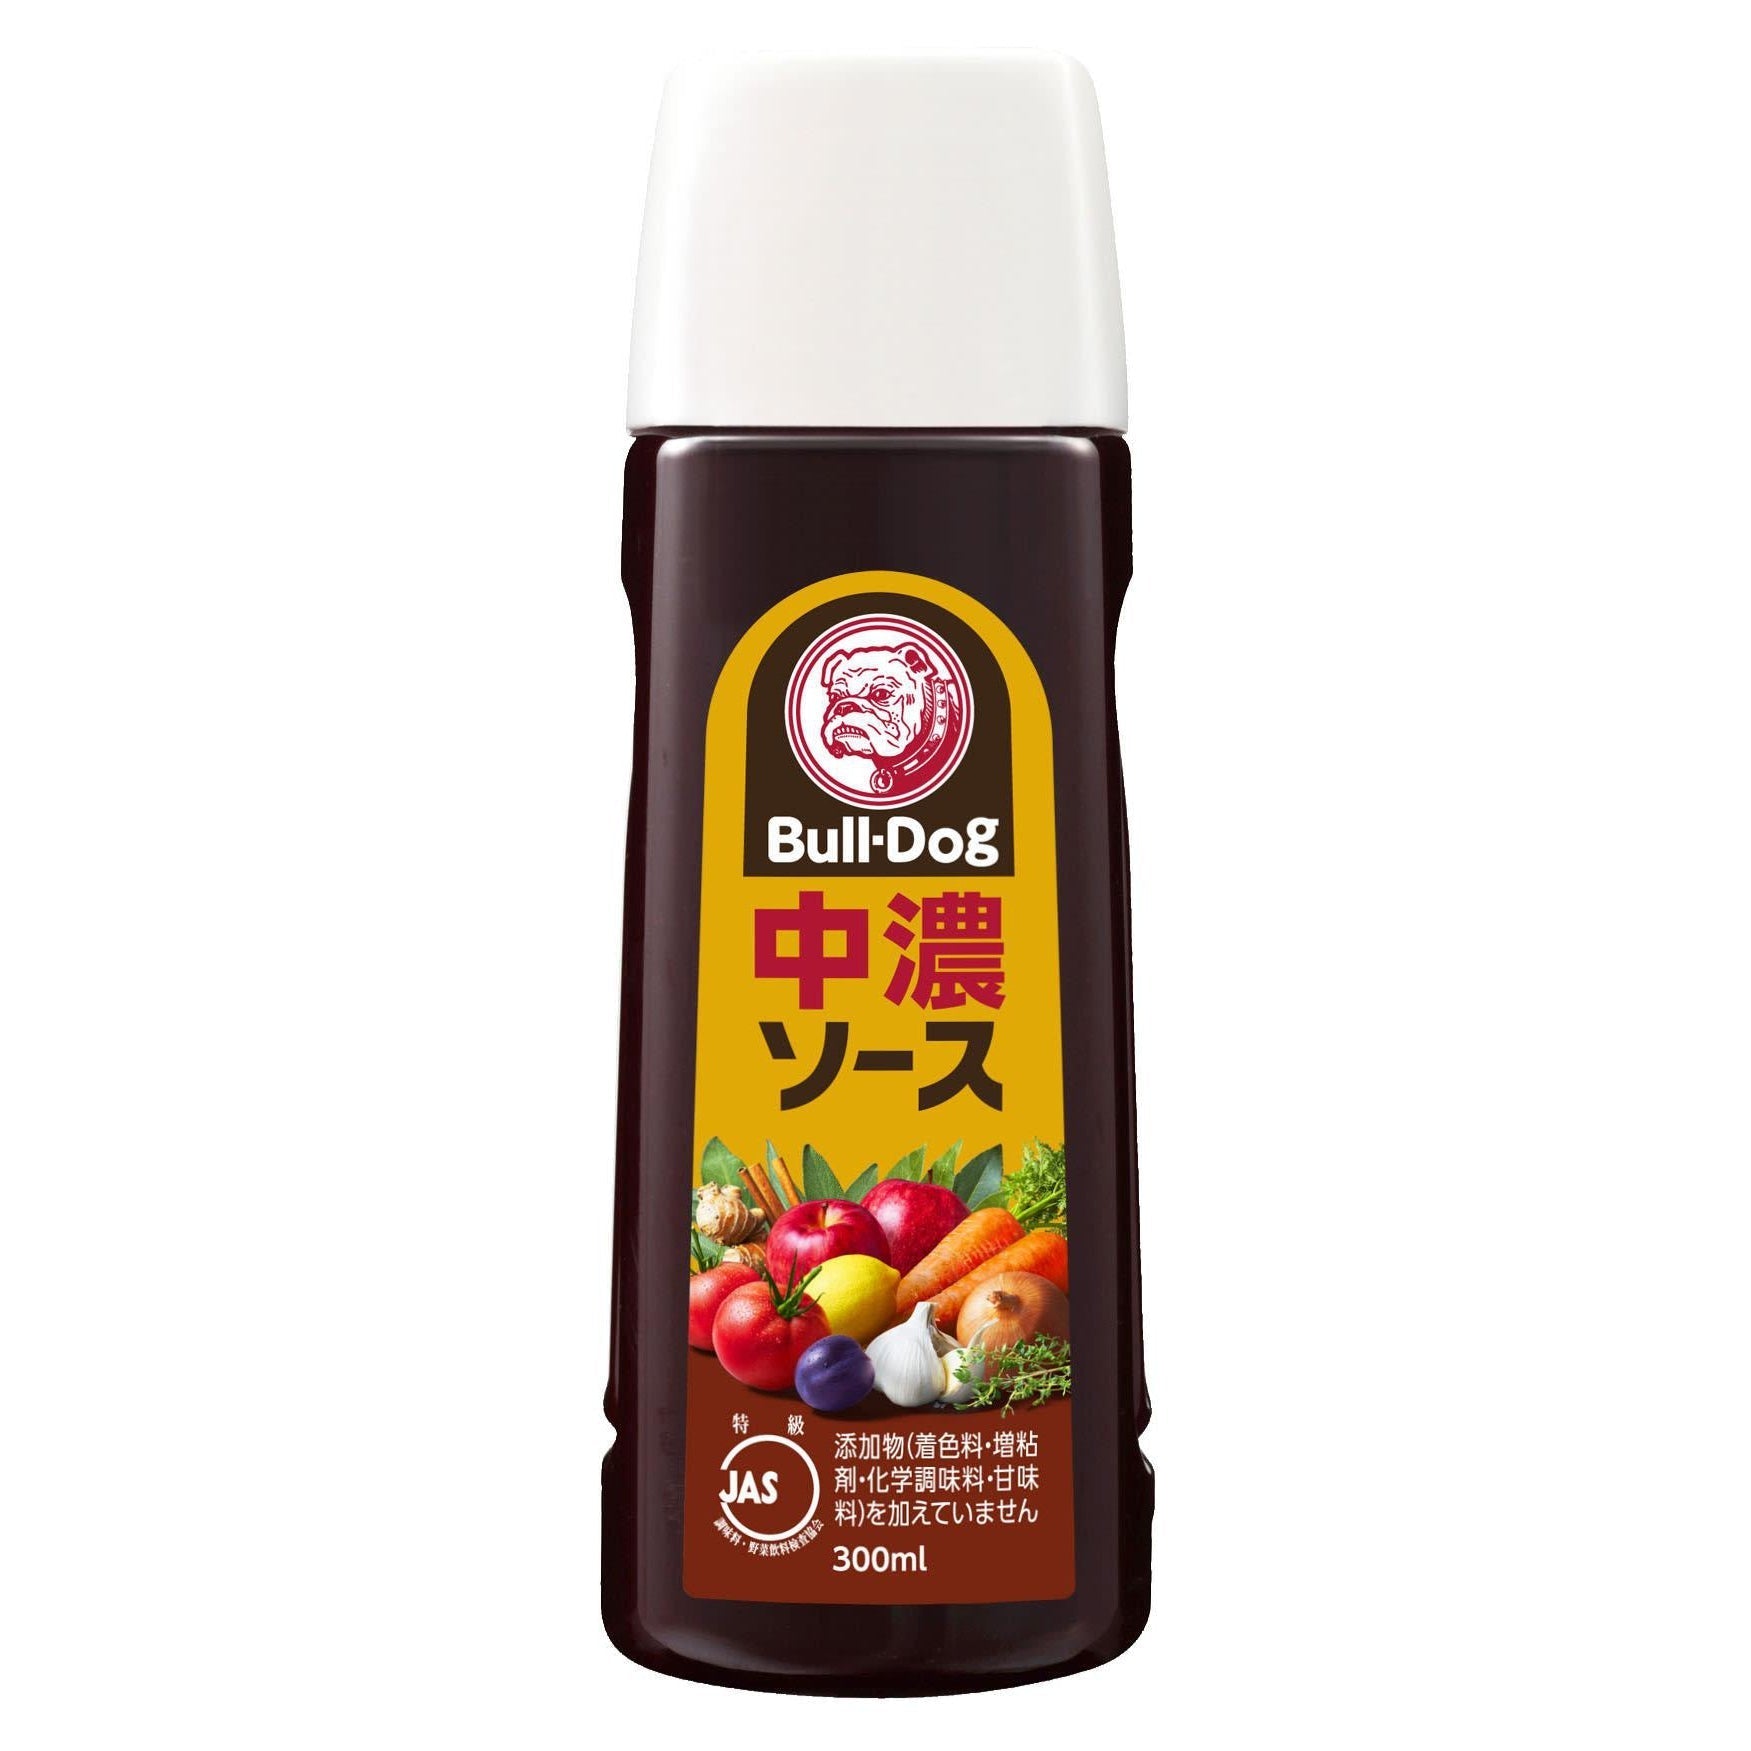 Bull - Dog Chuno Sauce Vegetable & Fruit Sauce 300ml